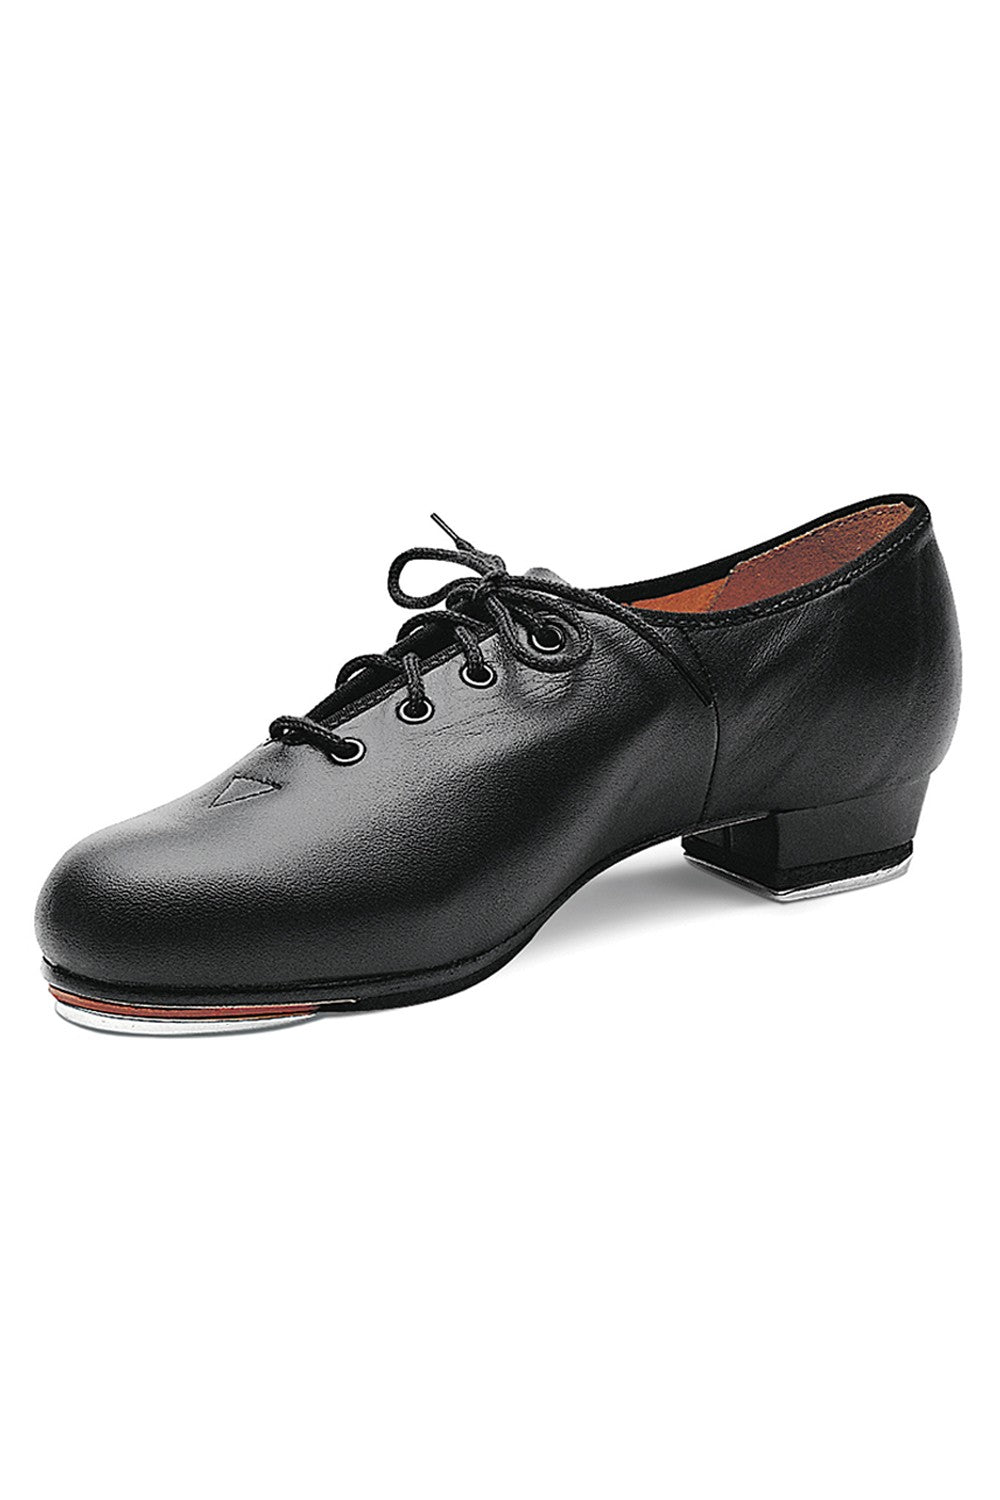 Bloch Men's Jazztap Shoes